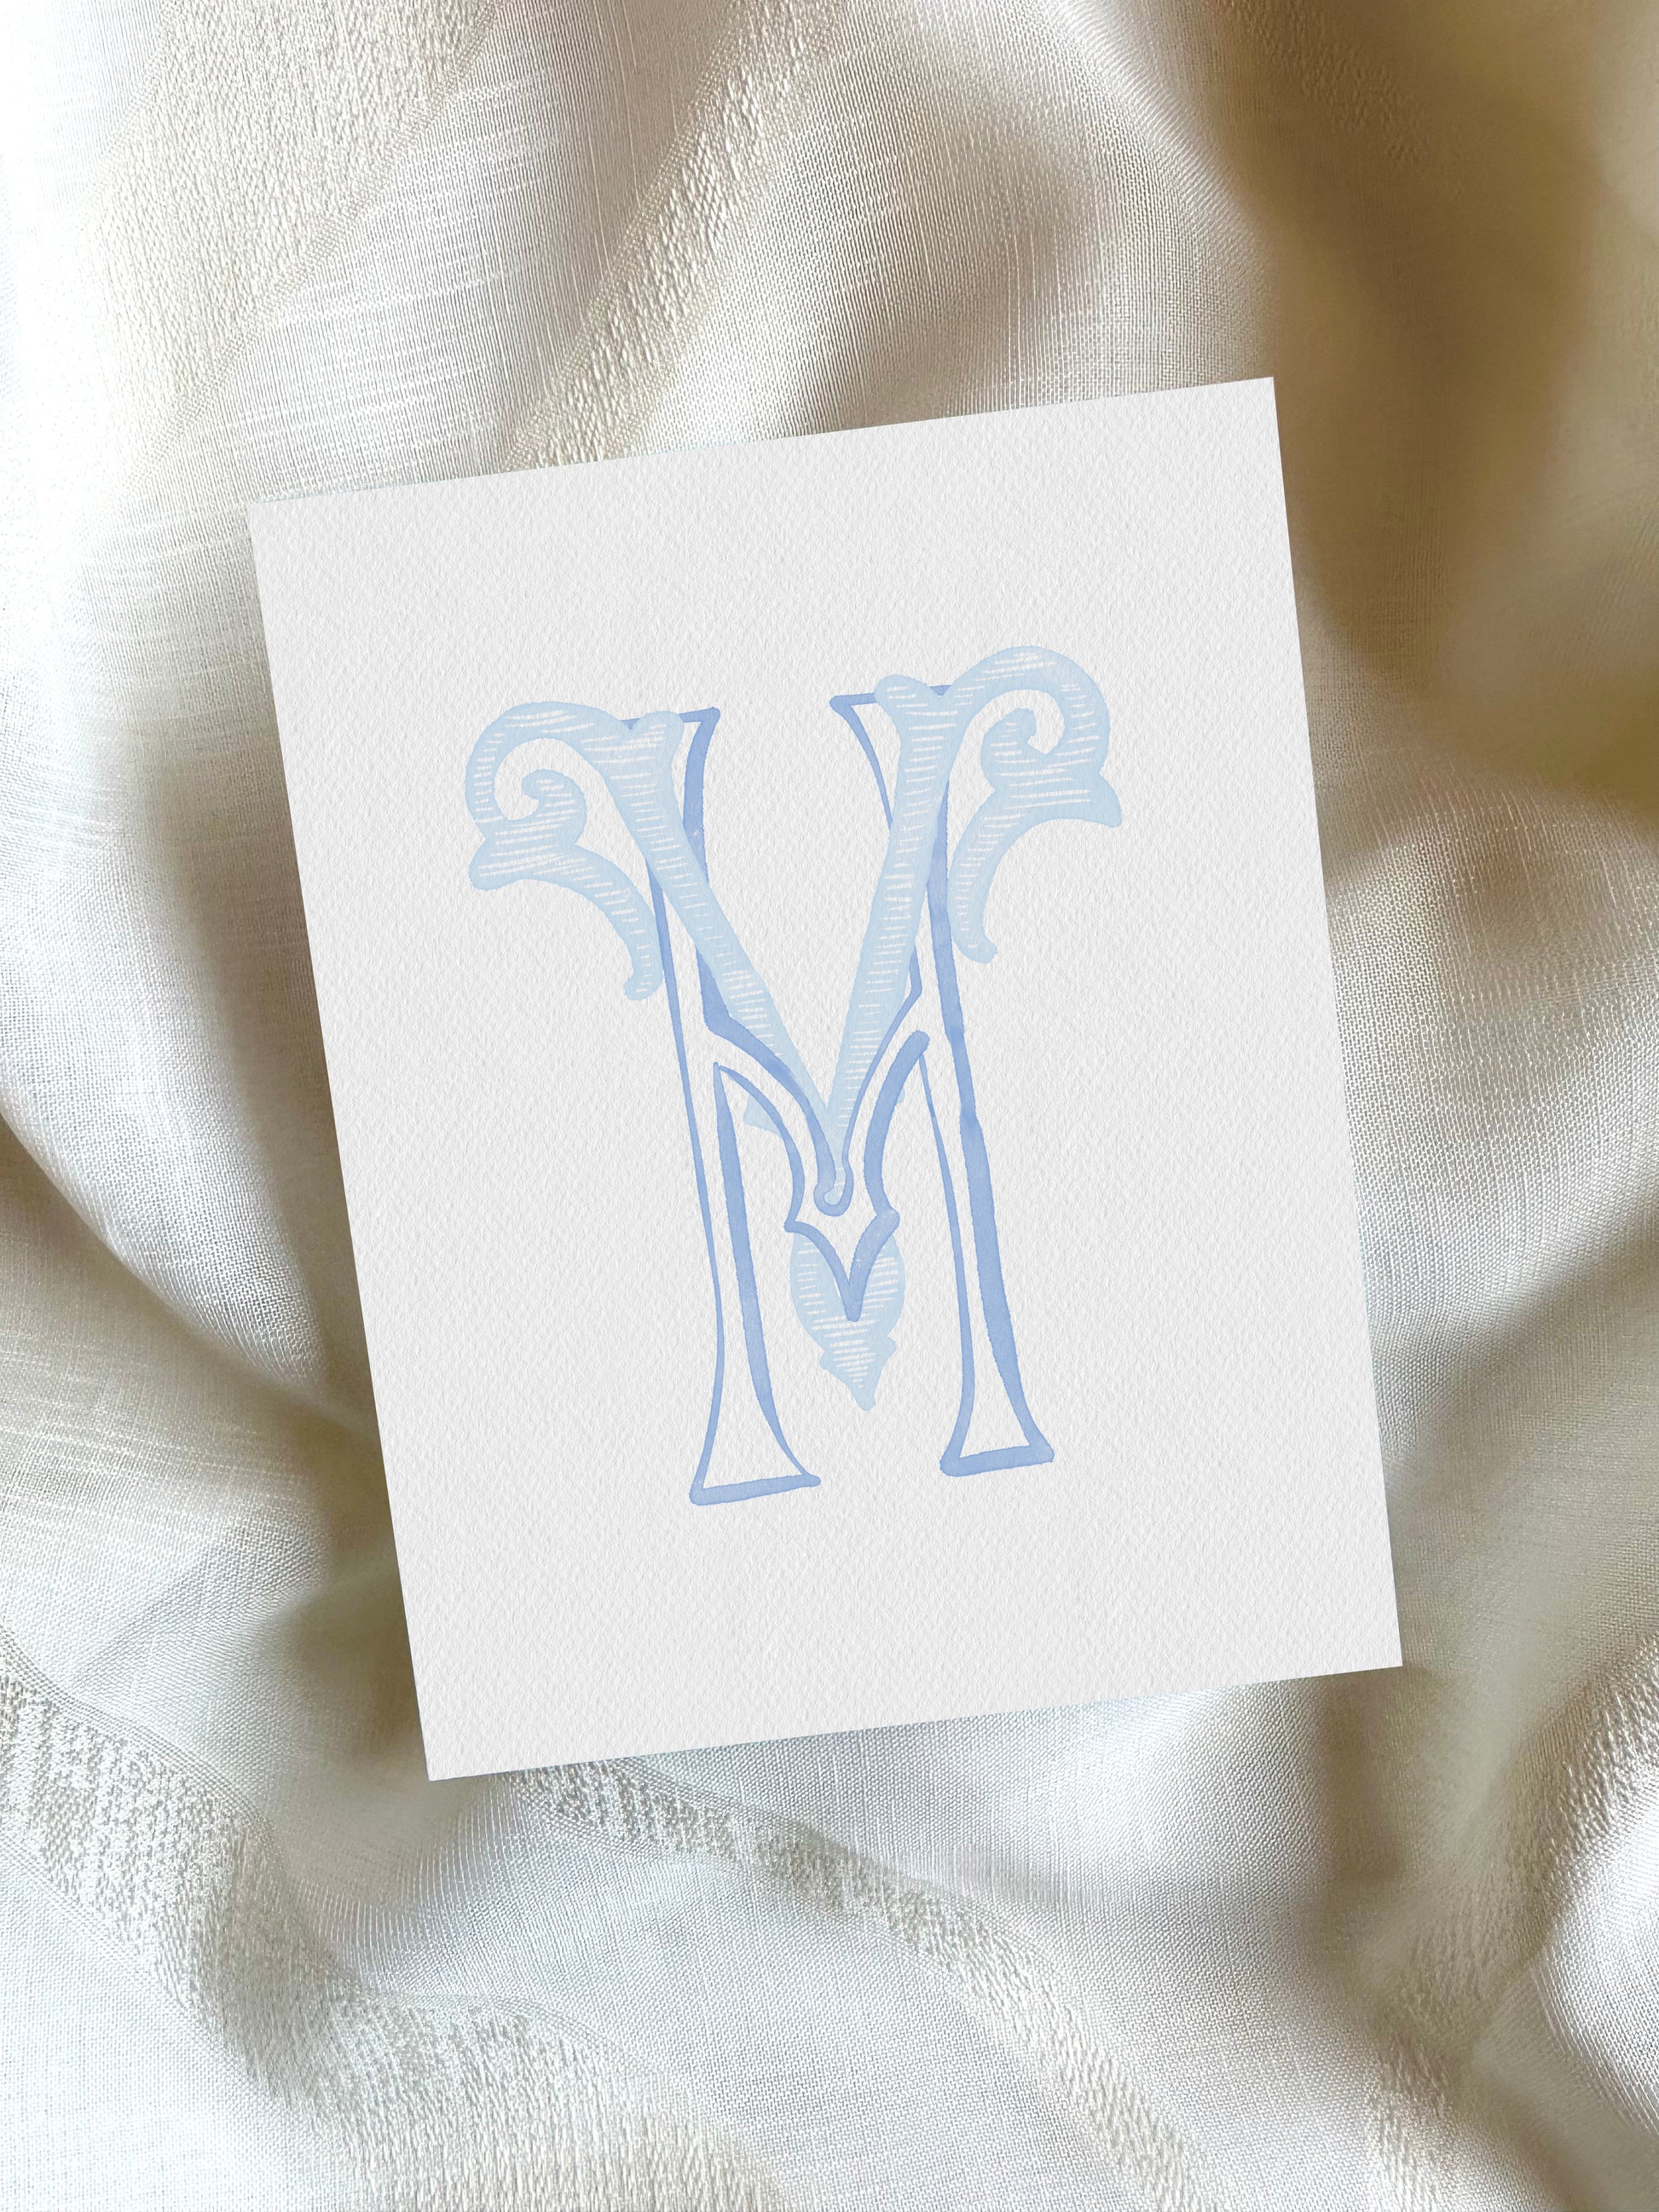 2 Letter Monogram with Letters HV VH | Digital Download - Wedding Monogram SVG, Personal Logo, Wedding Logo for Wedding Invitations The Wedding Crest Lab